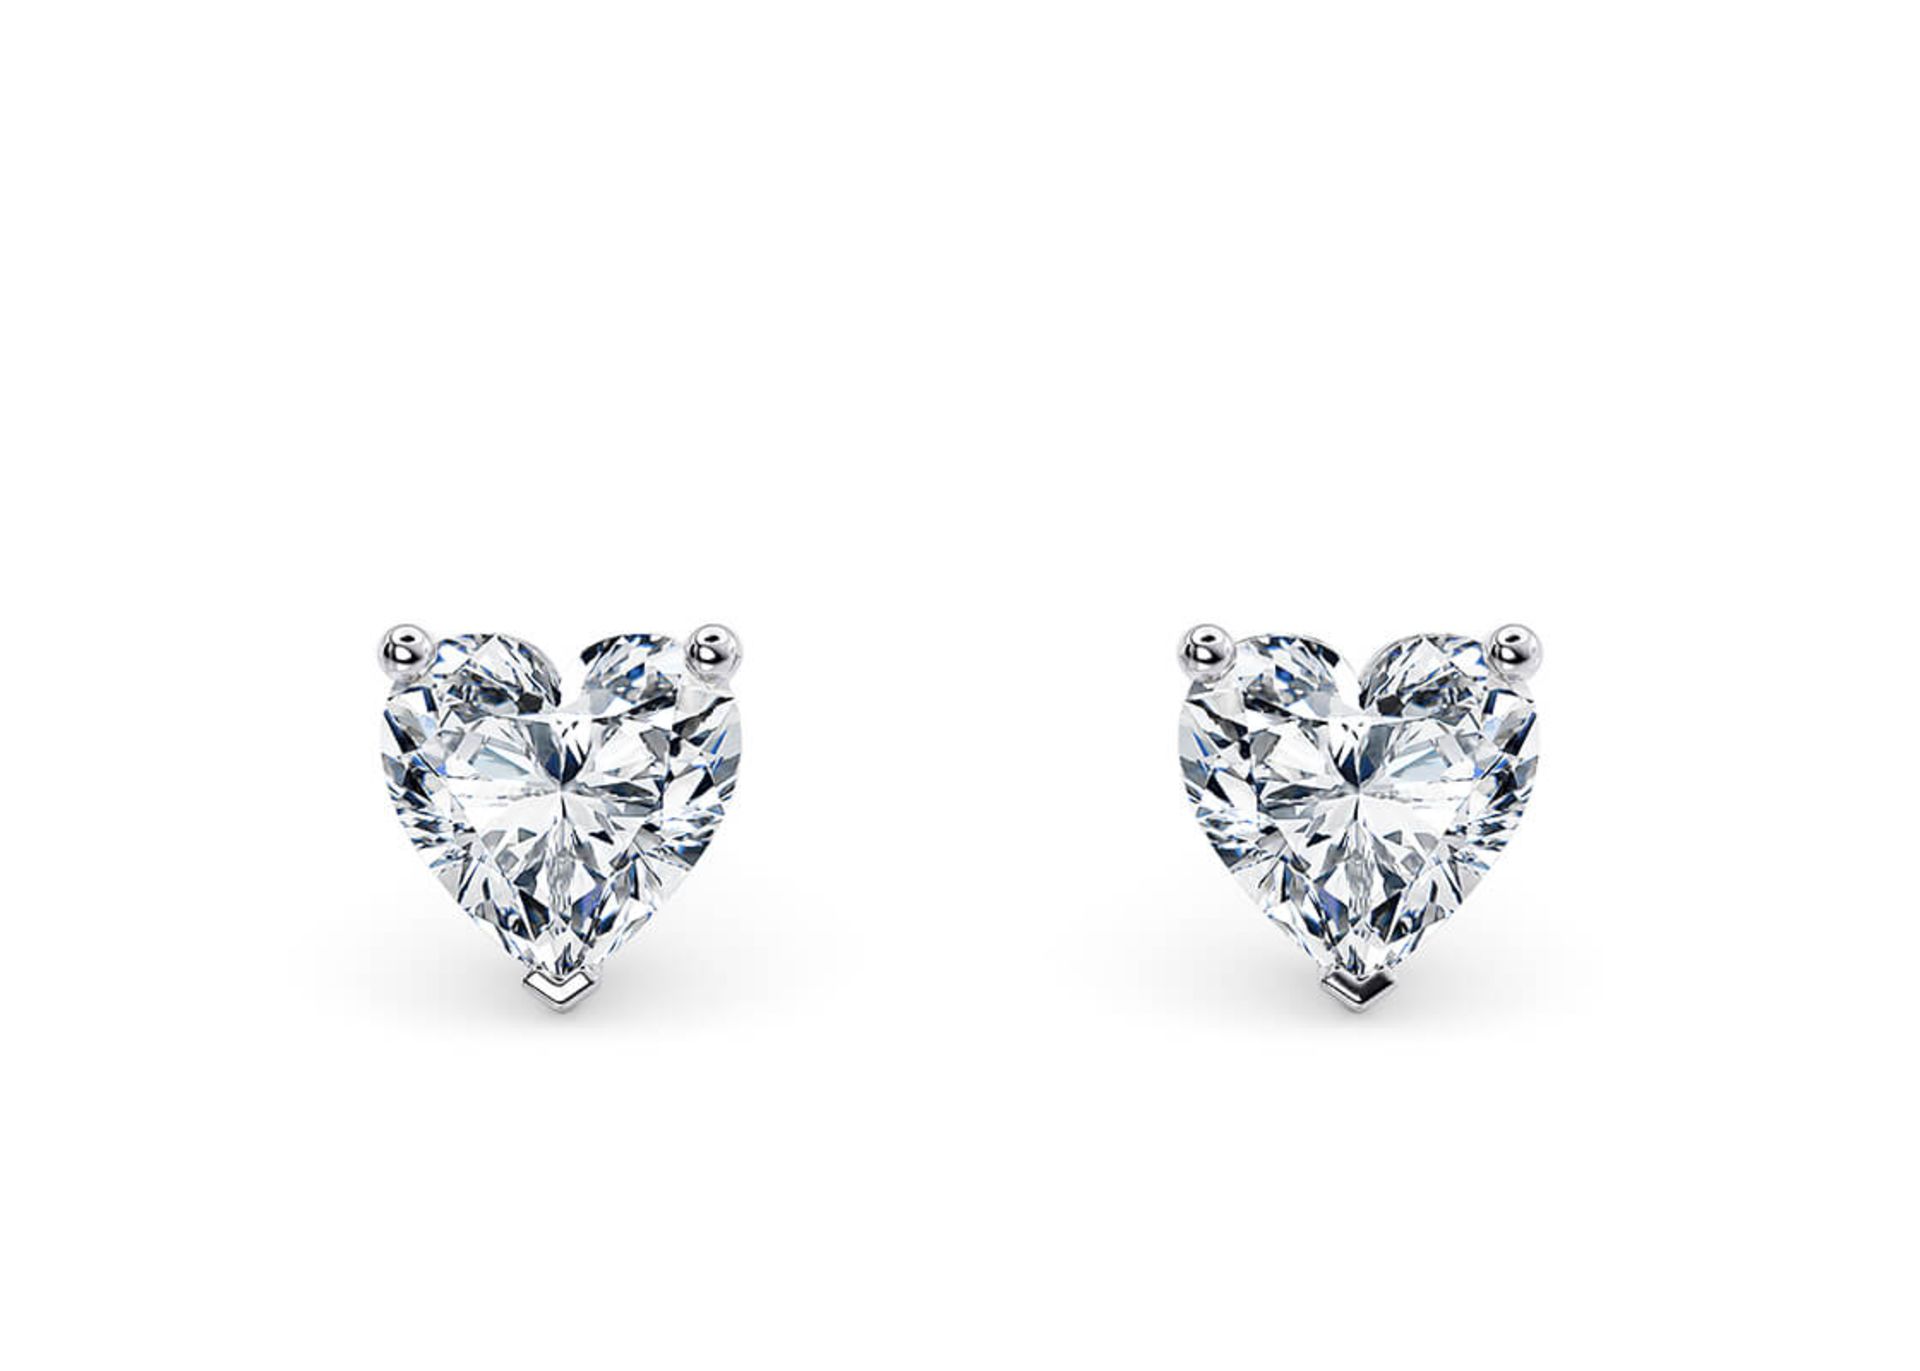 Heart Cut 6.00 Carat Diamond Earrings Set in 18kt White Gold - F Colour VS Clarity - IGI